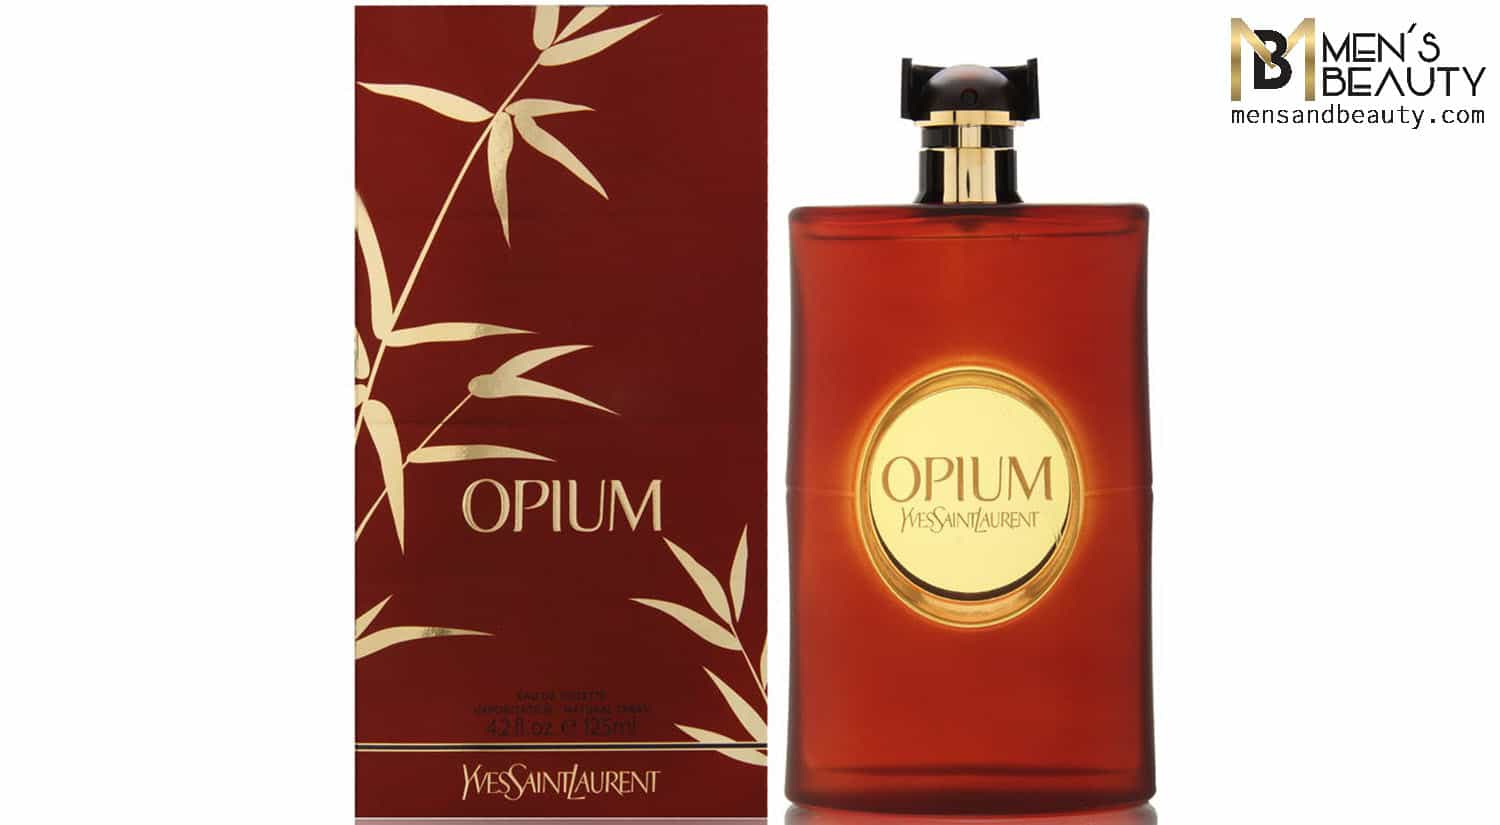 mejores perfumes mujer femeninos para ligar hombres opium yves saint laurent